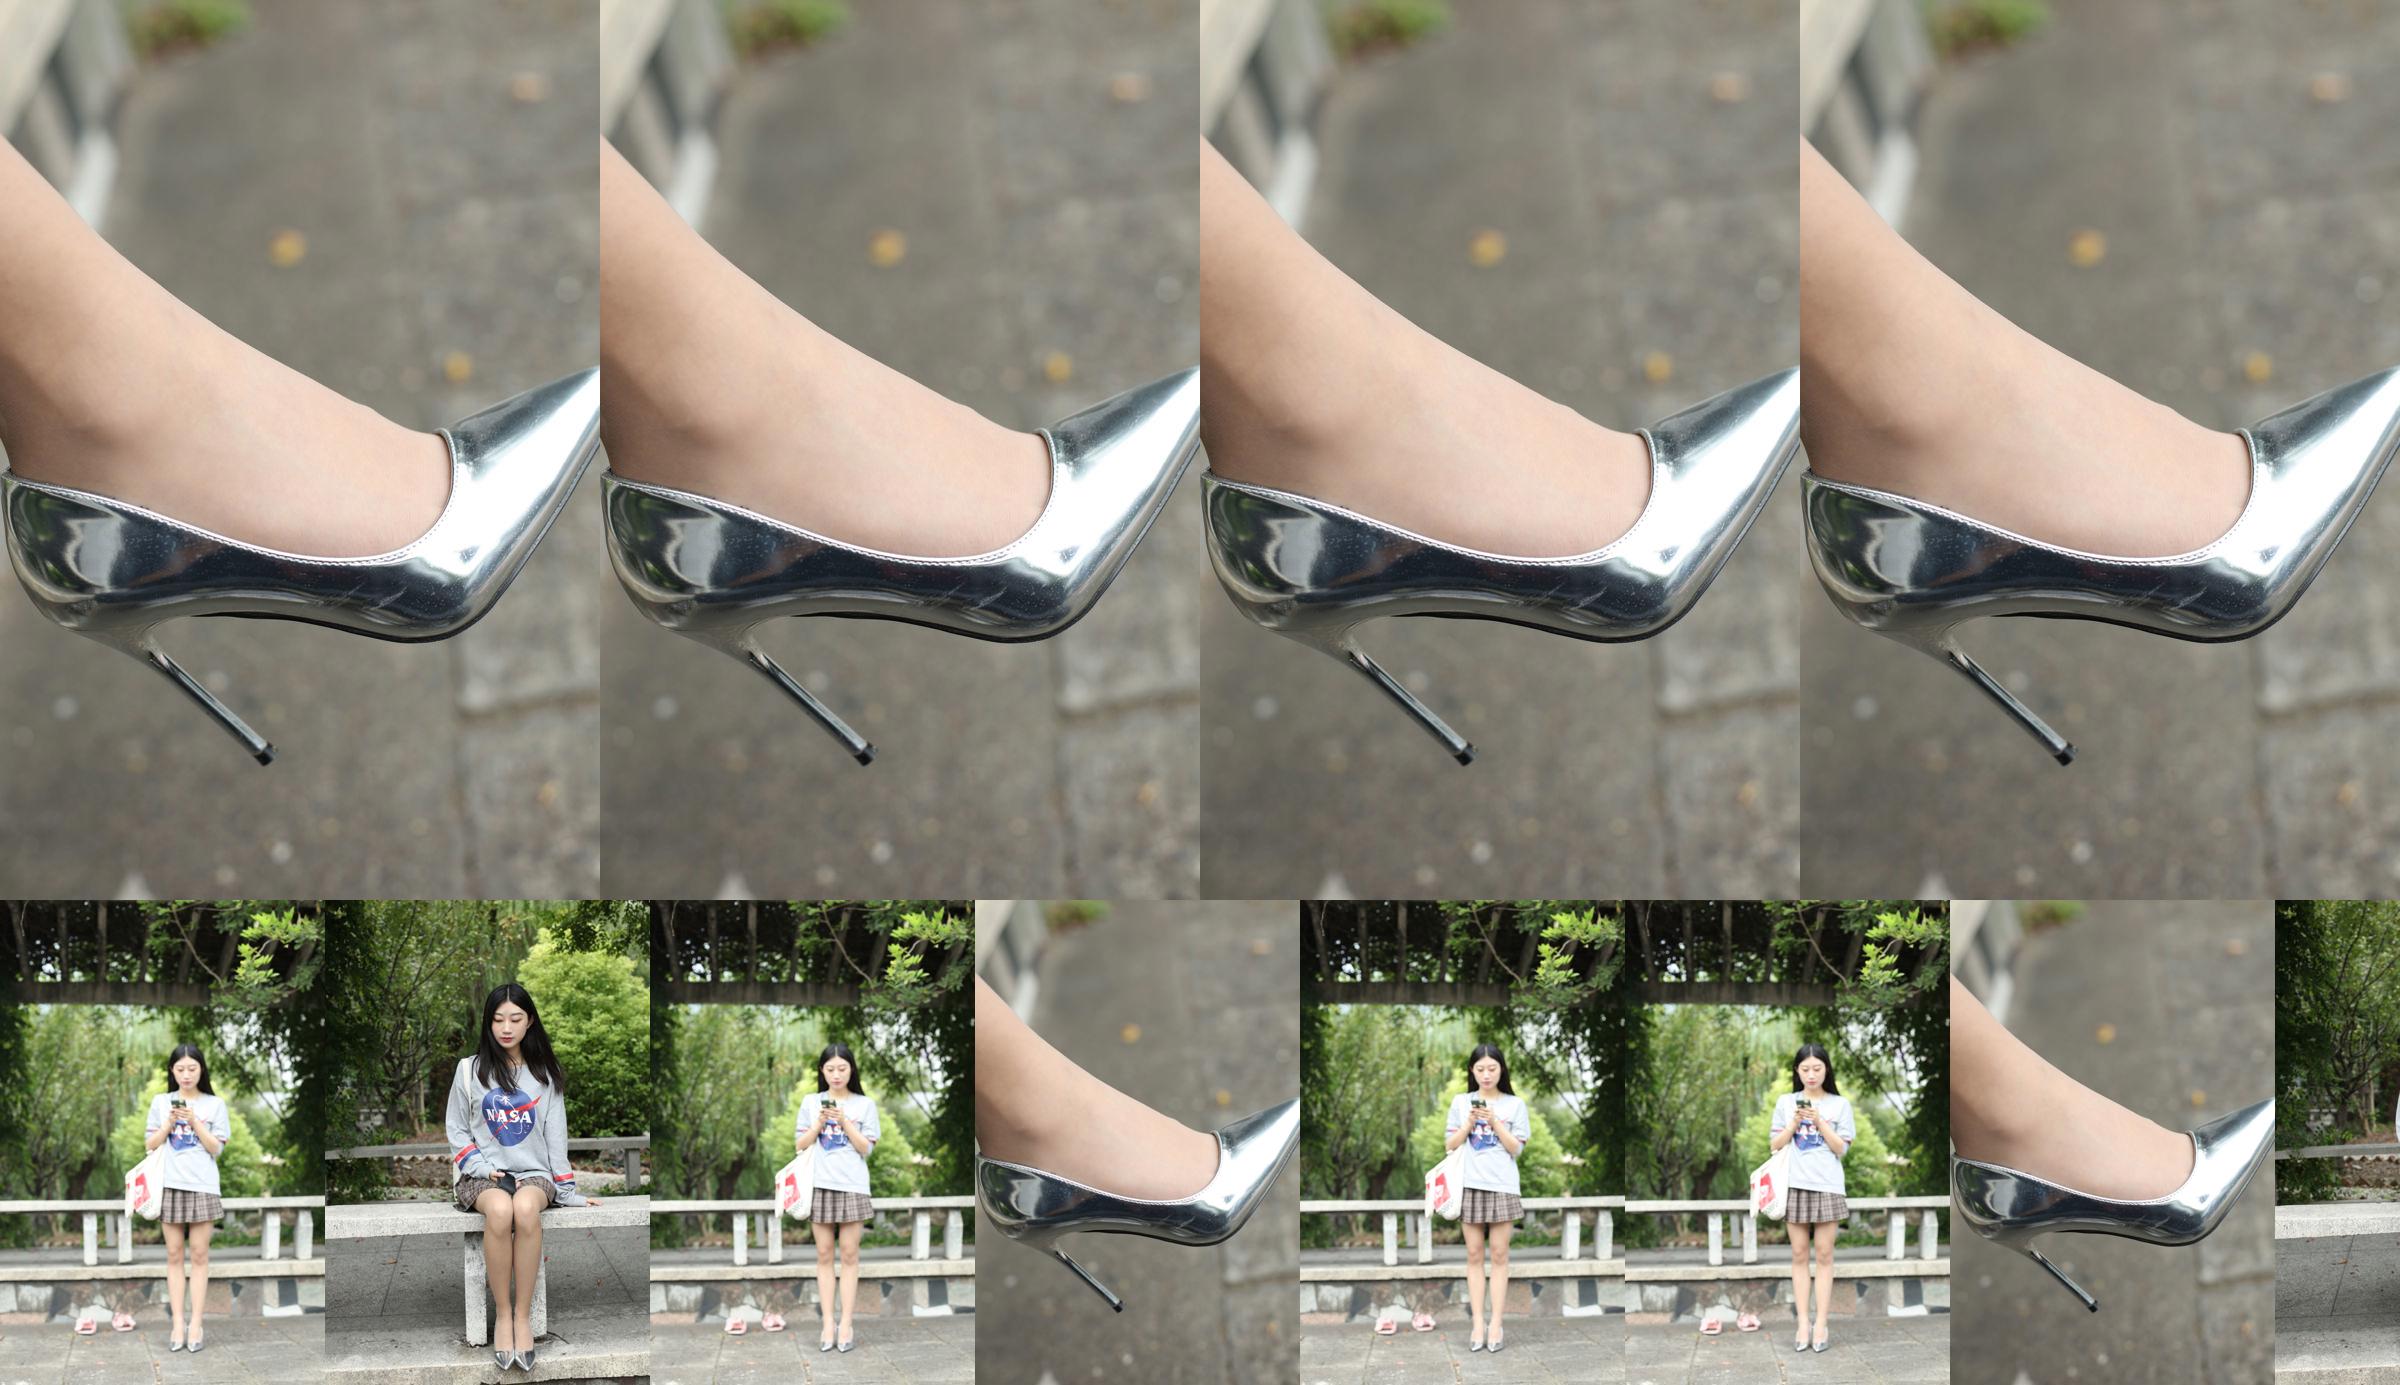 [Naisi] NO.147 Yi Ning, the soft girl on the long-legged stone bench No.c13155 Page 19